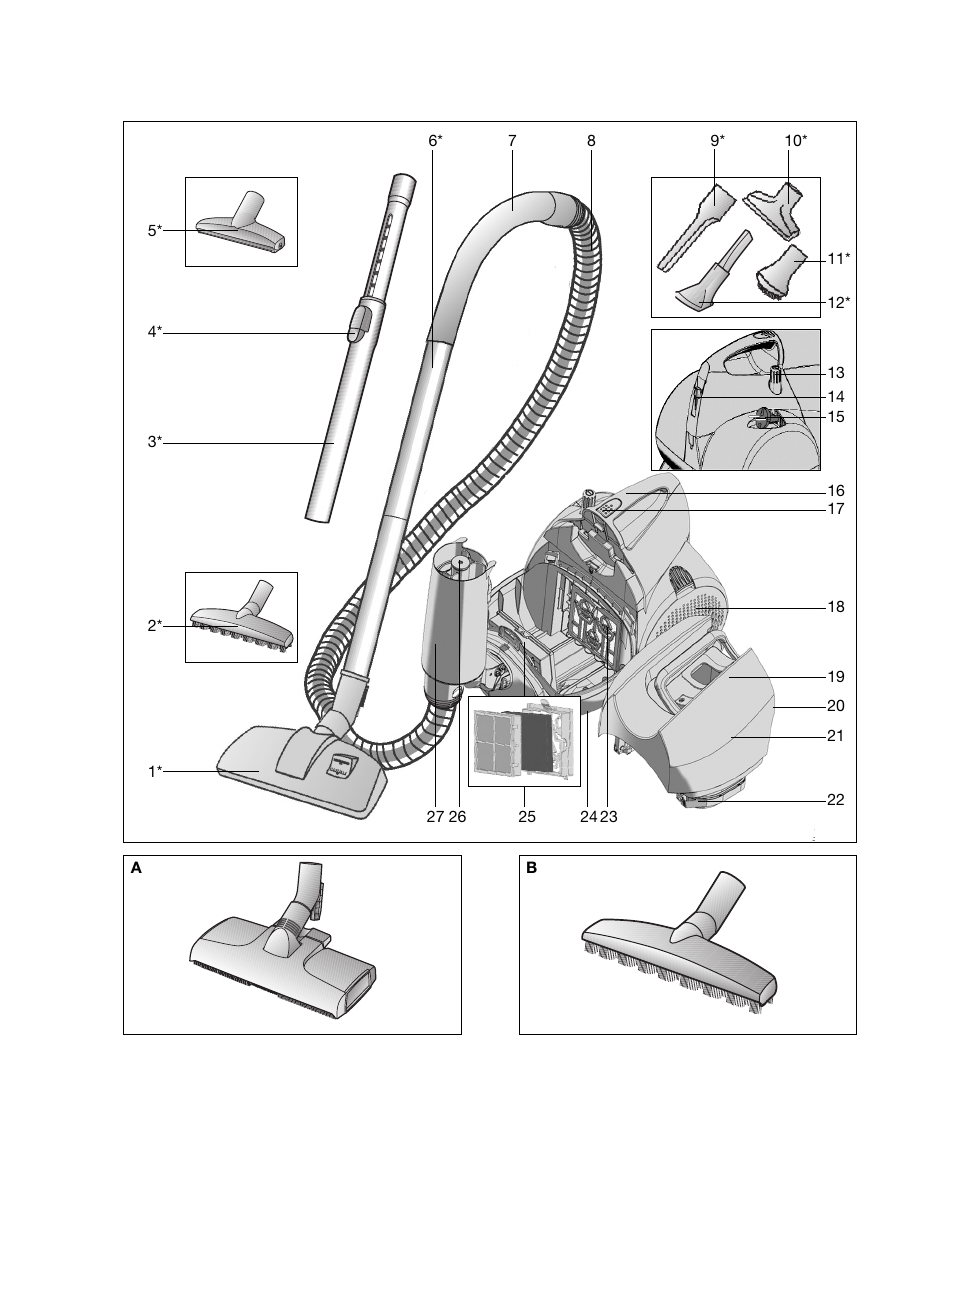 Bosch BX12222 Aspiradores sin bolsa BX1 parquet 2200 W EAN 4242002688992  User Manual | Page 137 / 142 | Original mode | Also for: BX12101  Aspiradores sin bolsa BX1 parquet 2100 W EAN 4242002689319